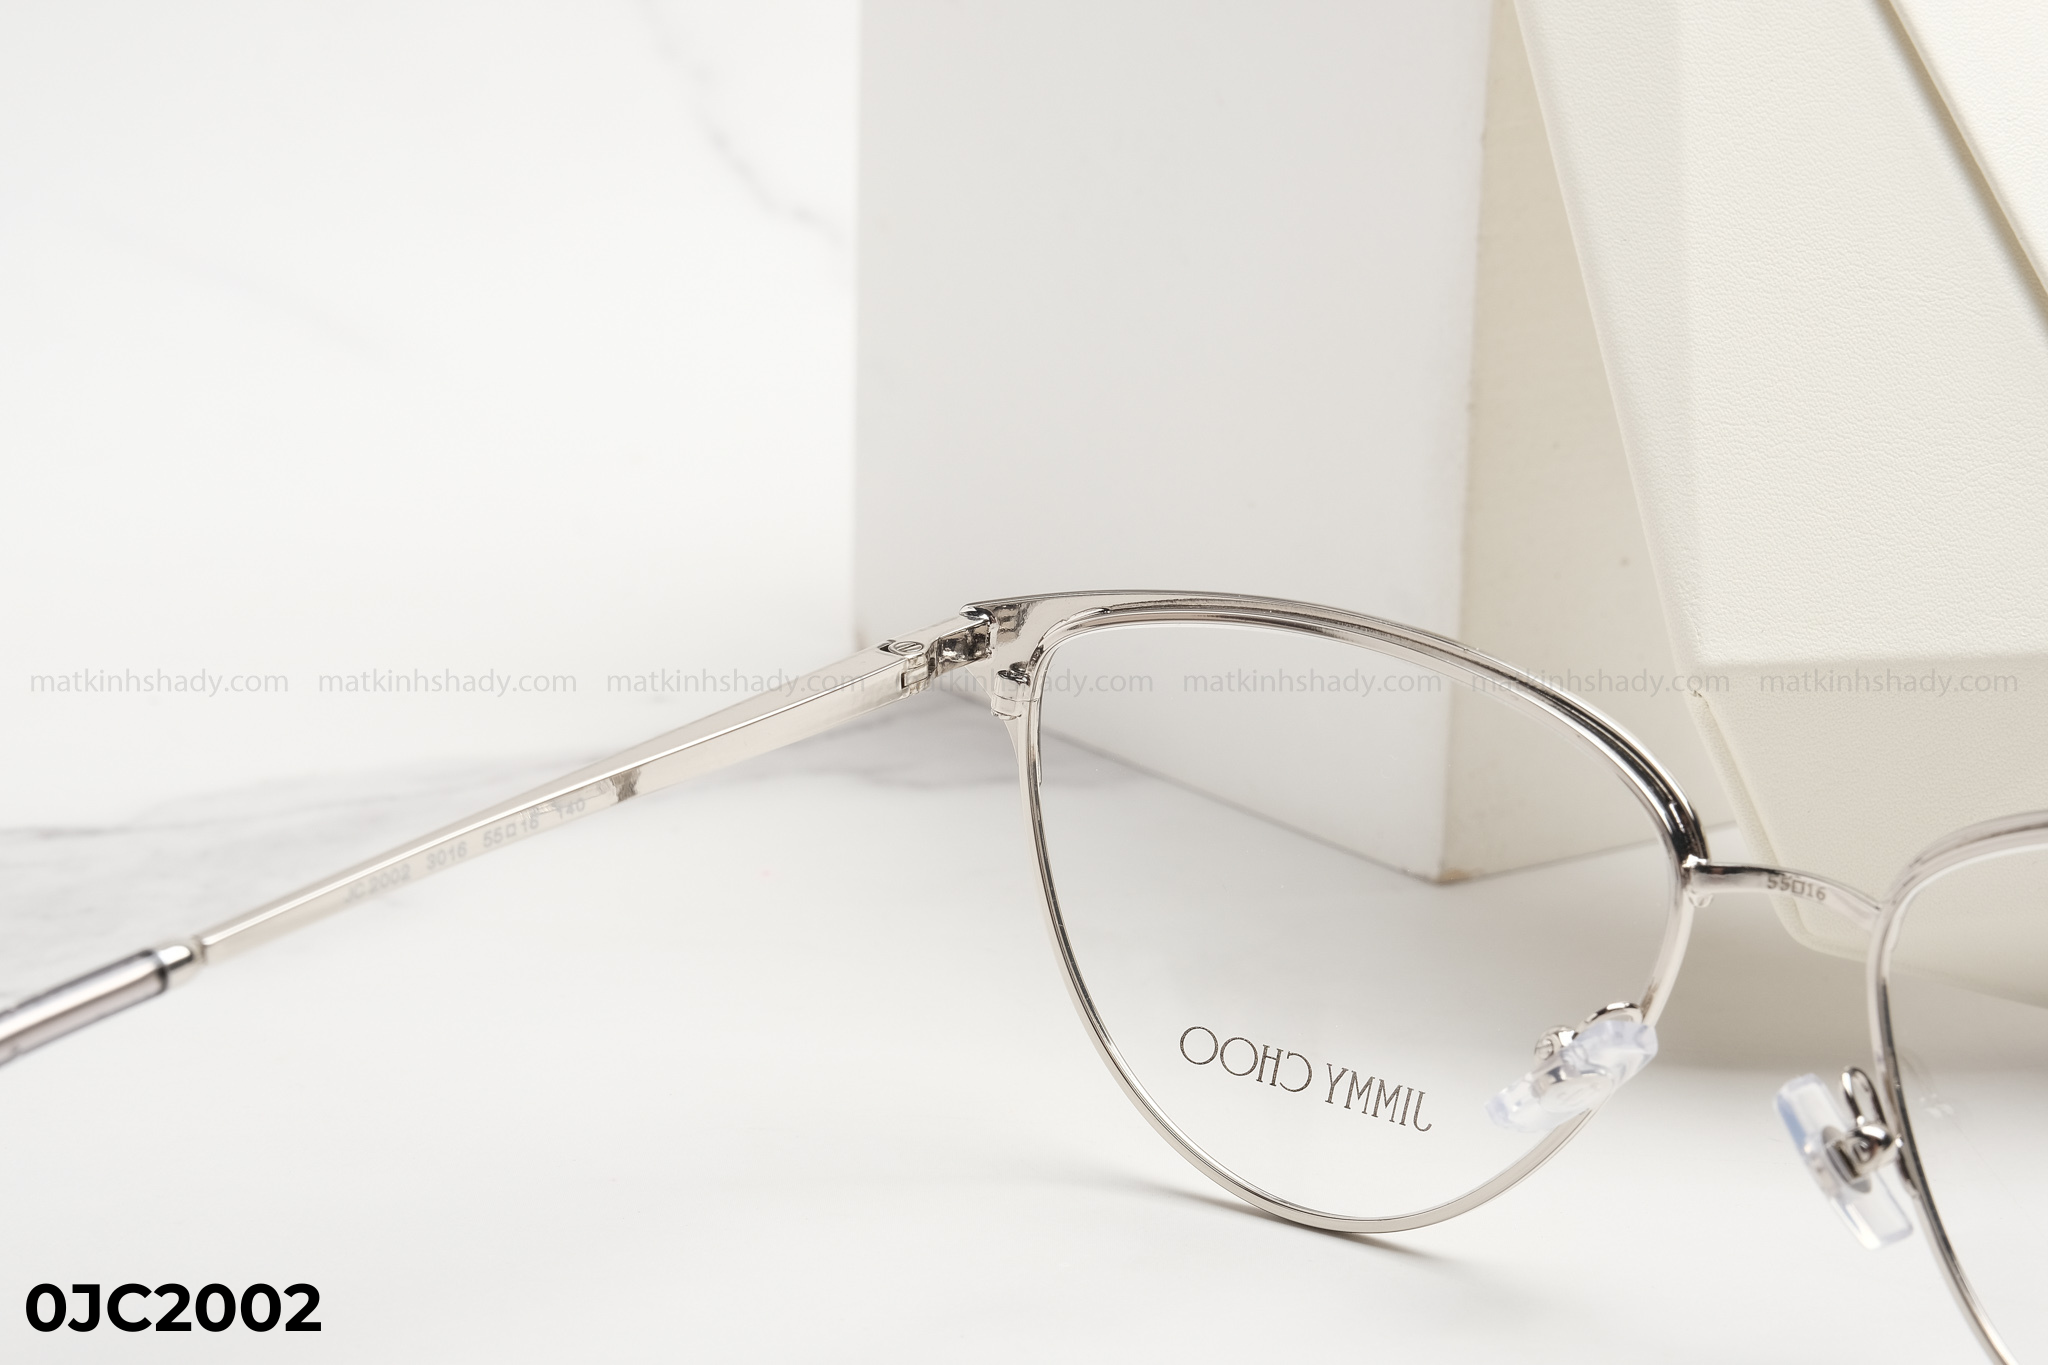  Jimmy Choo Eyewear - Glasses - 0JC2002 